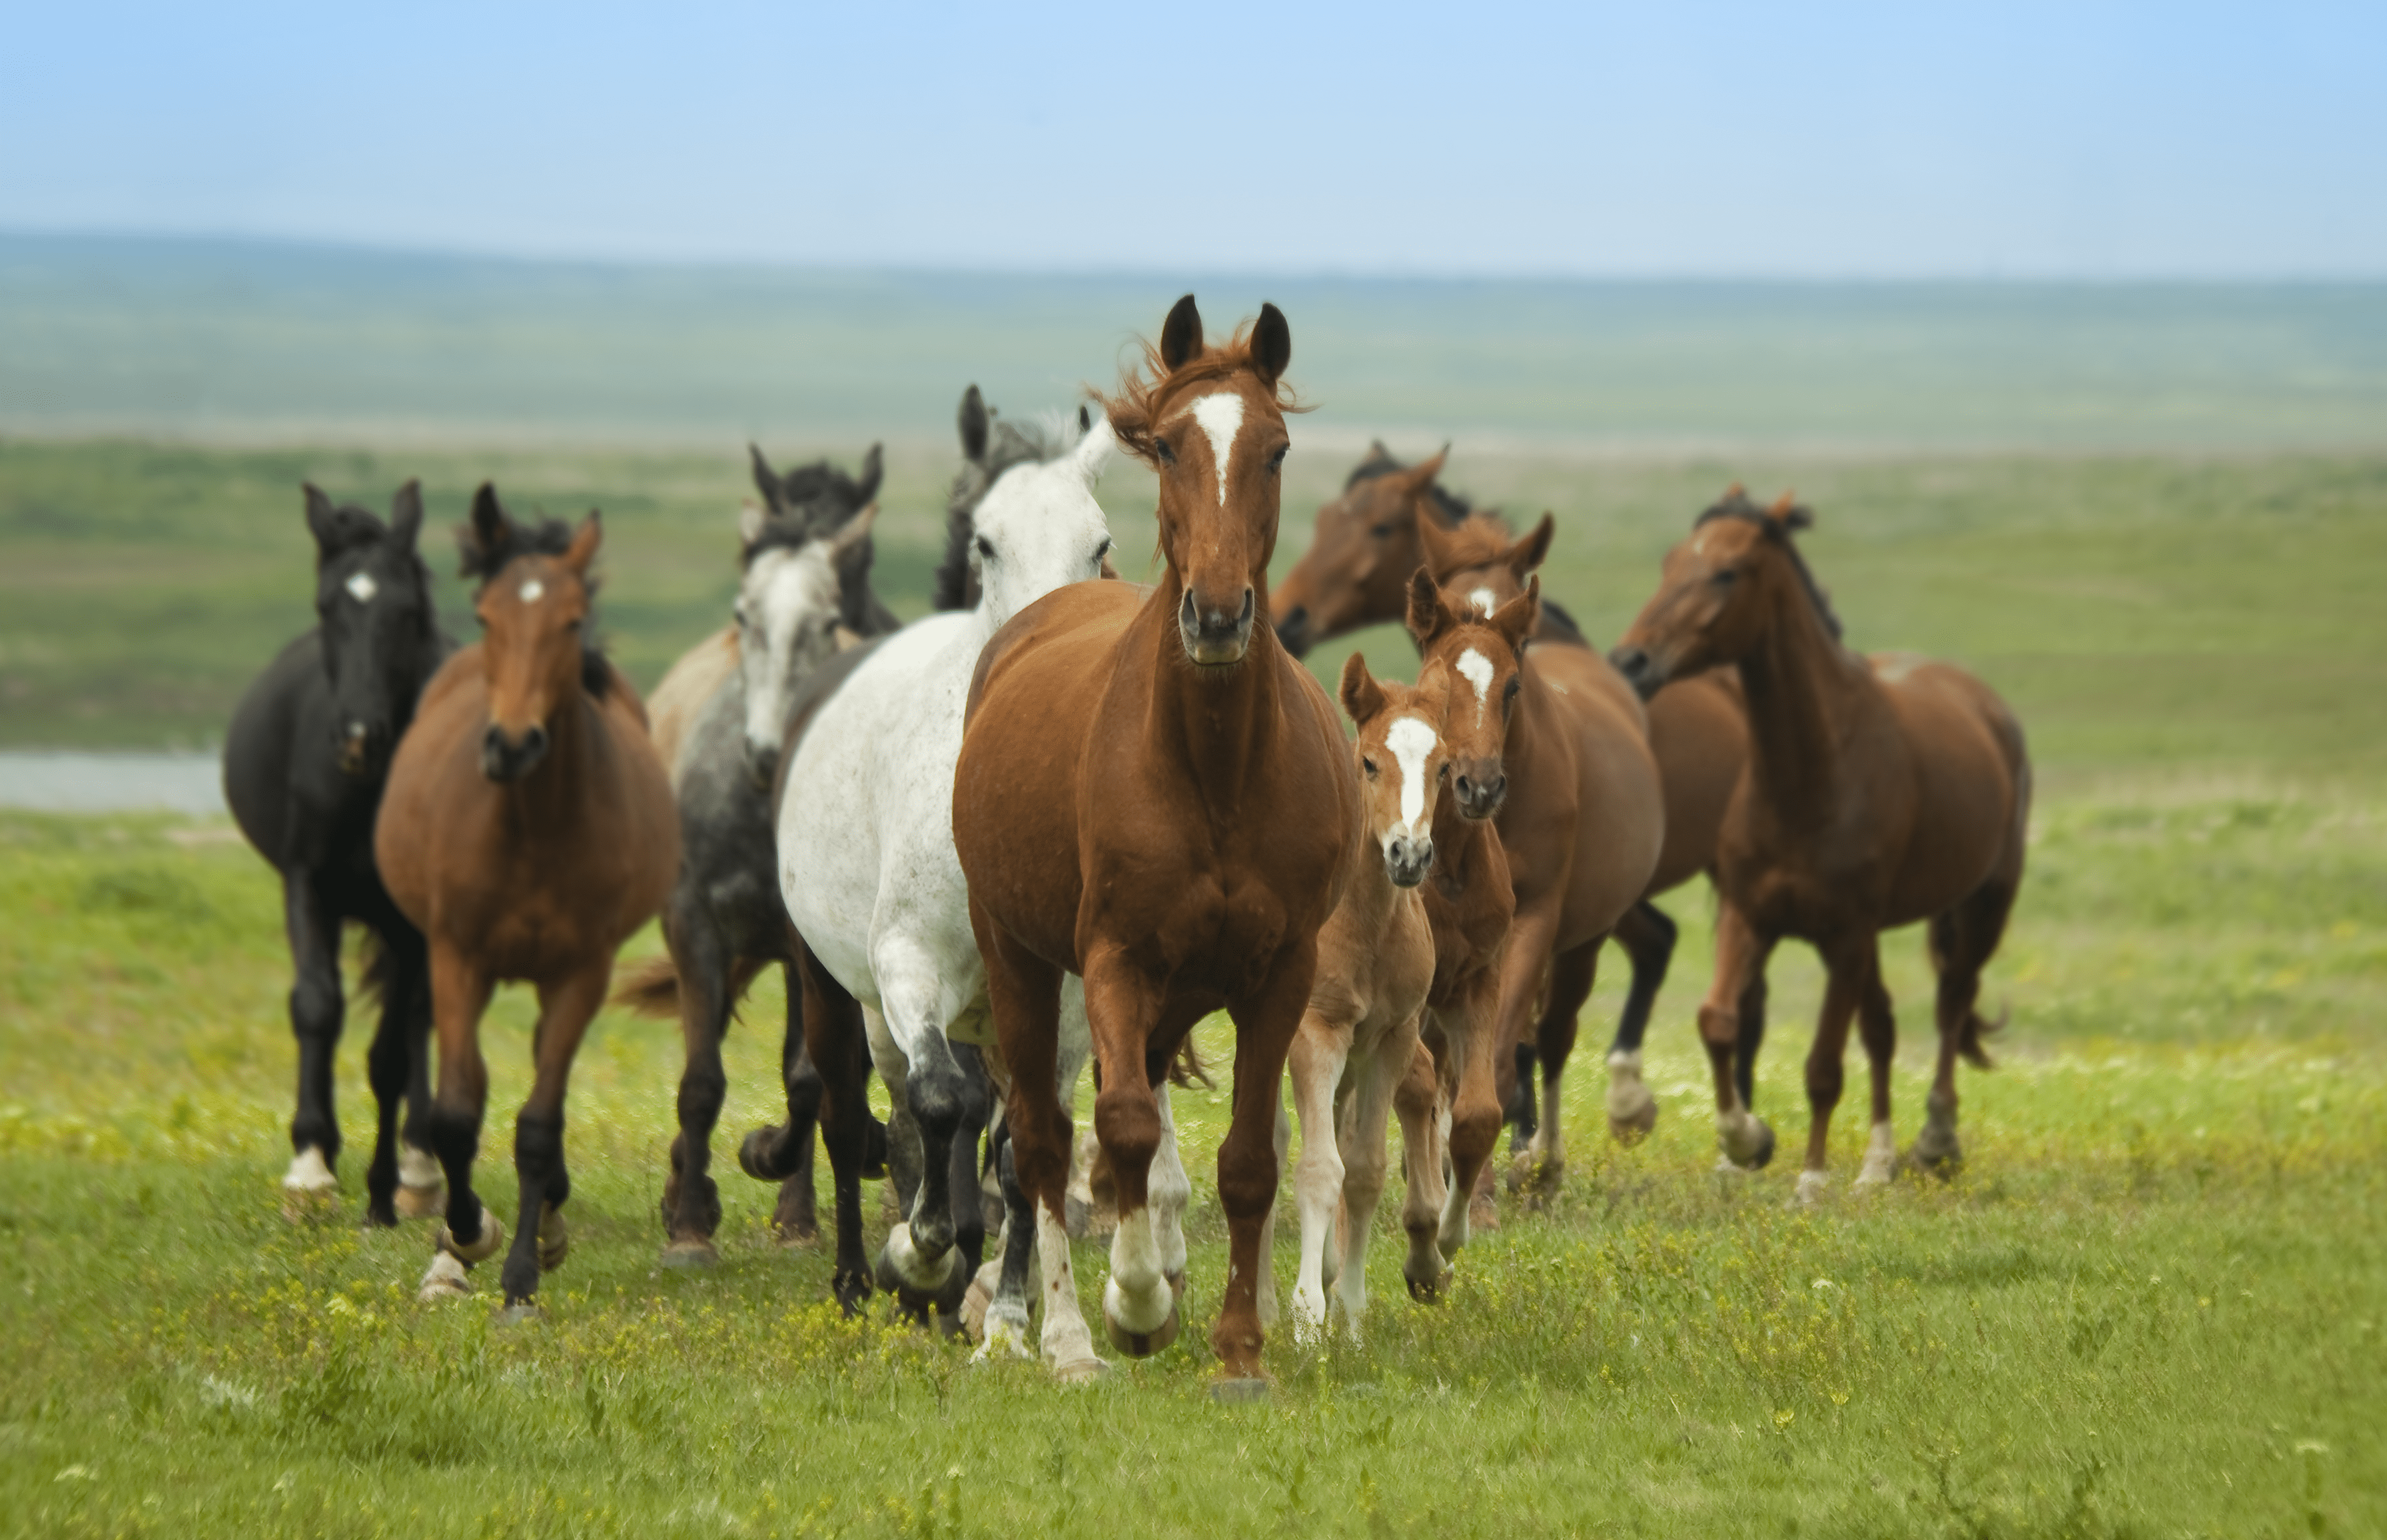 Equine coat color genetics - Wikipedia